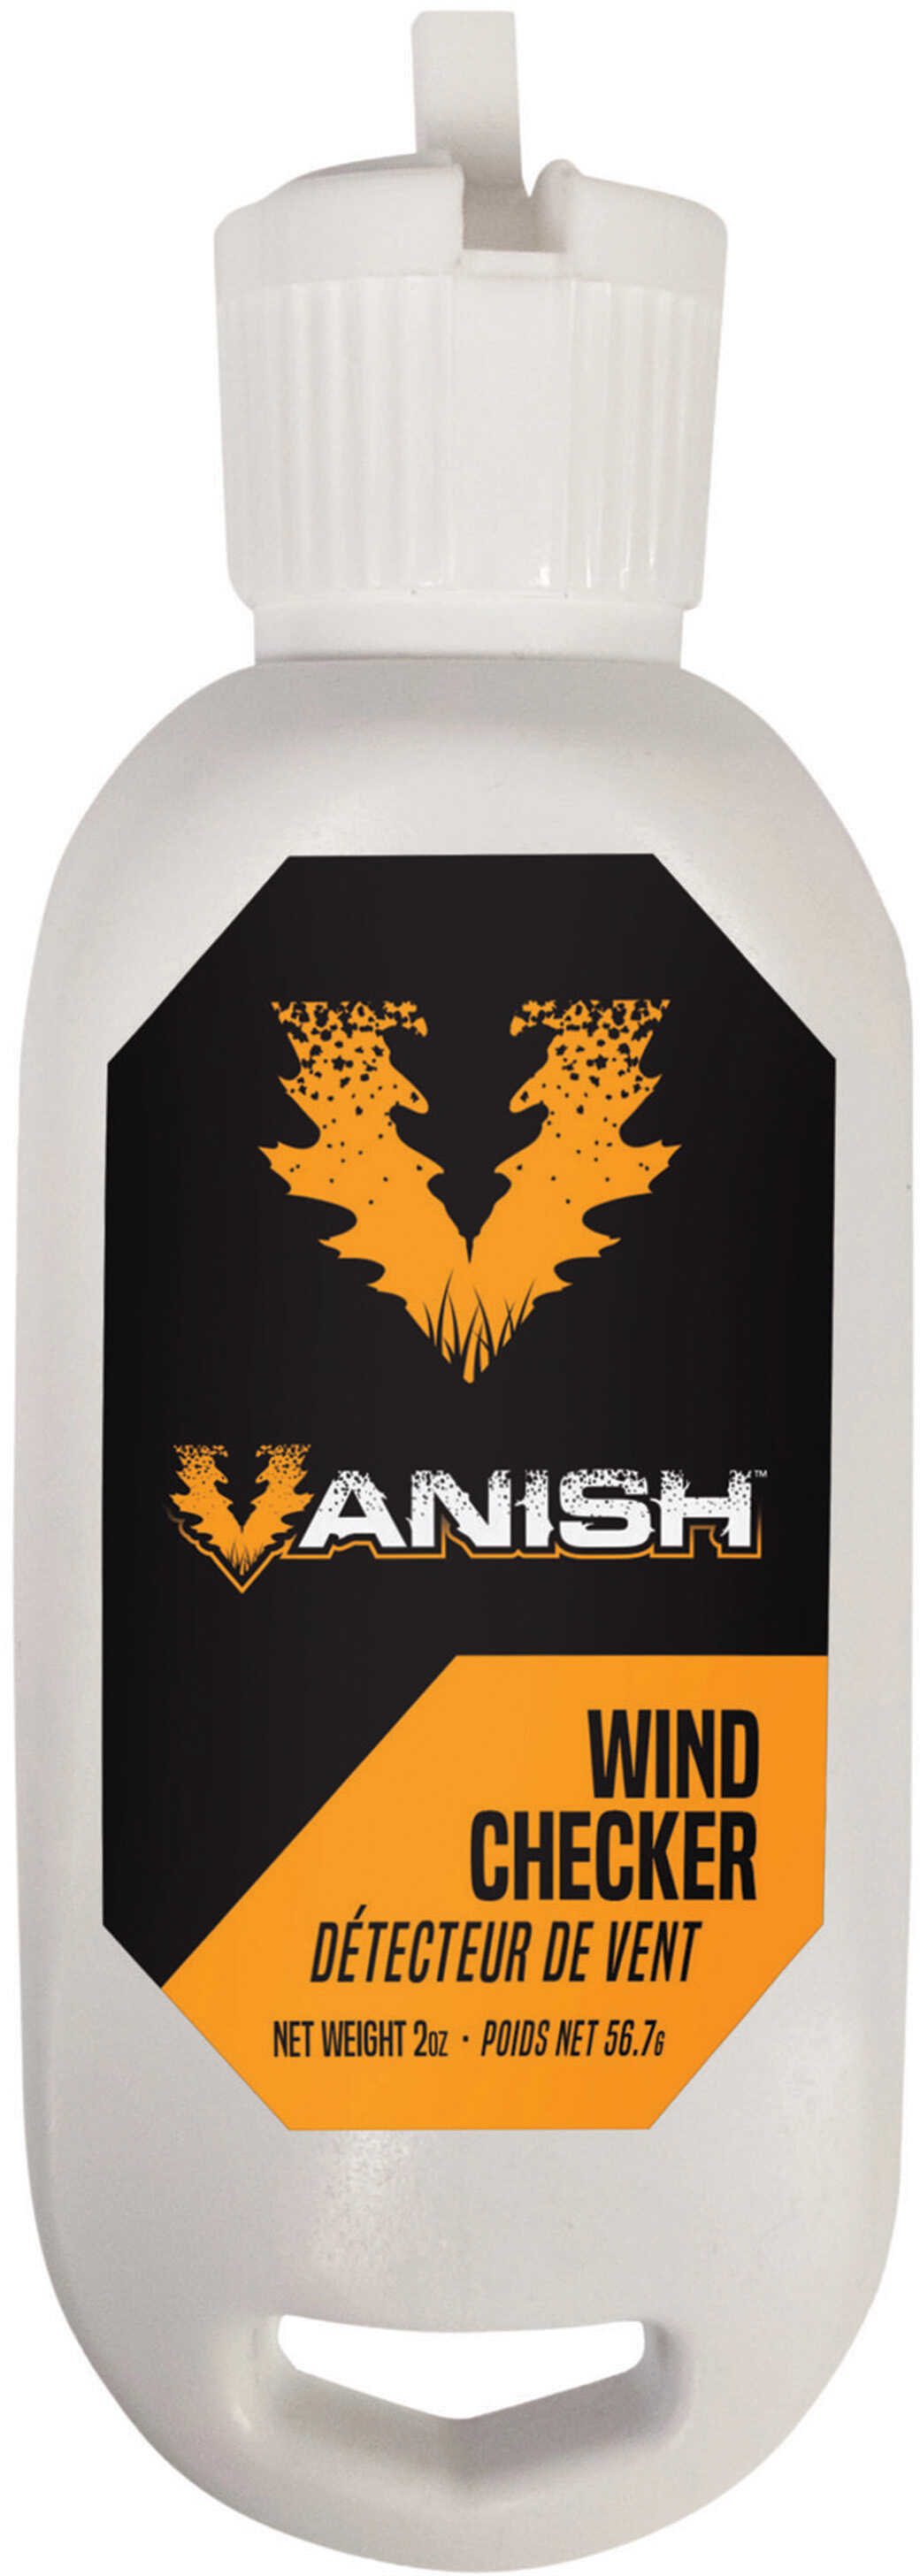 Vanish Wind Checker .35 oz. Model: 4713